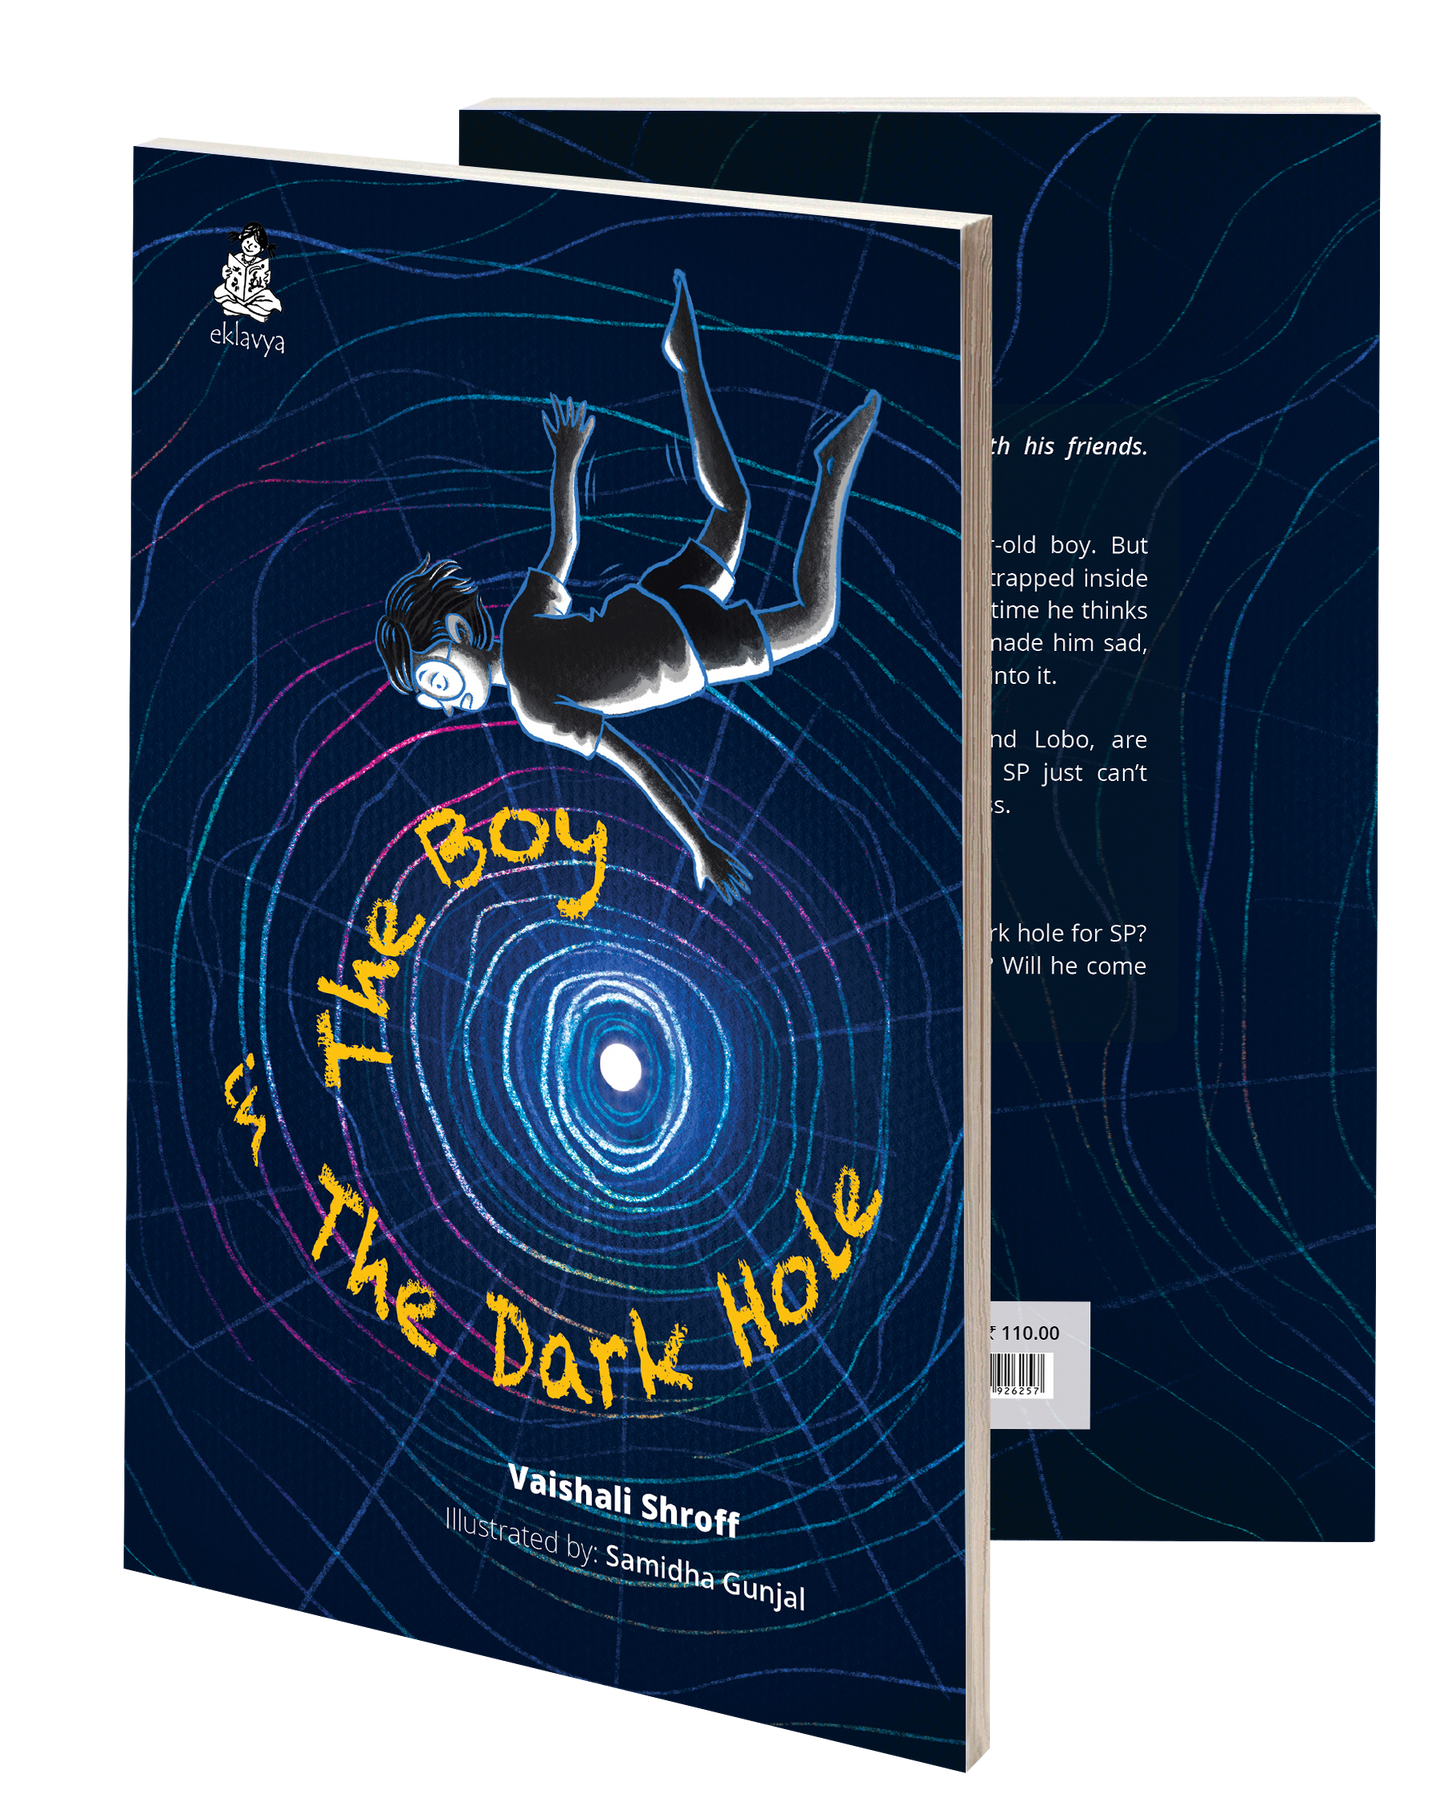 The Boy in The Dark Hole